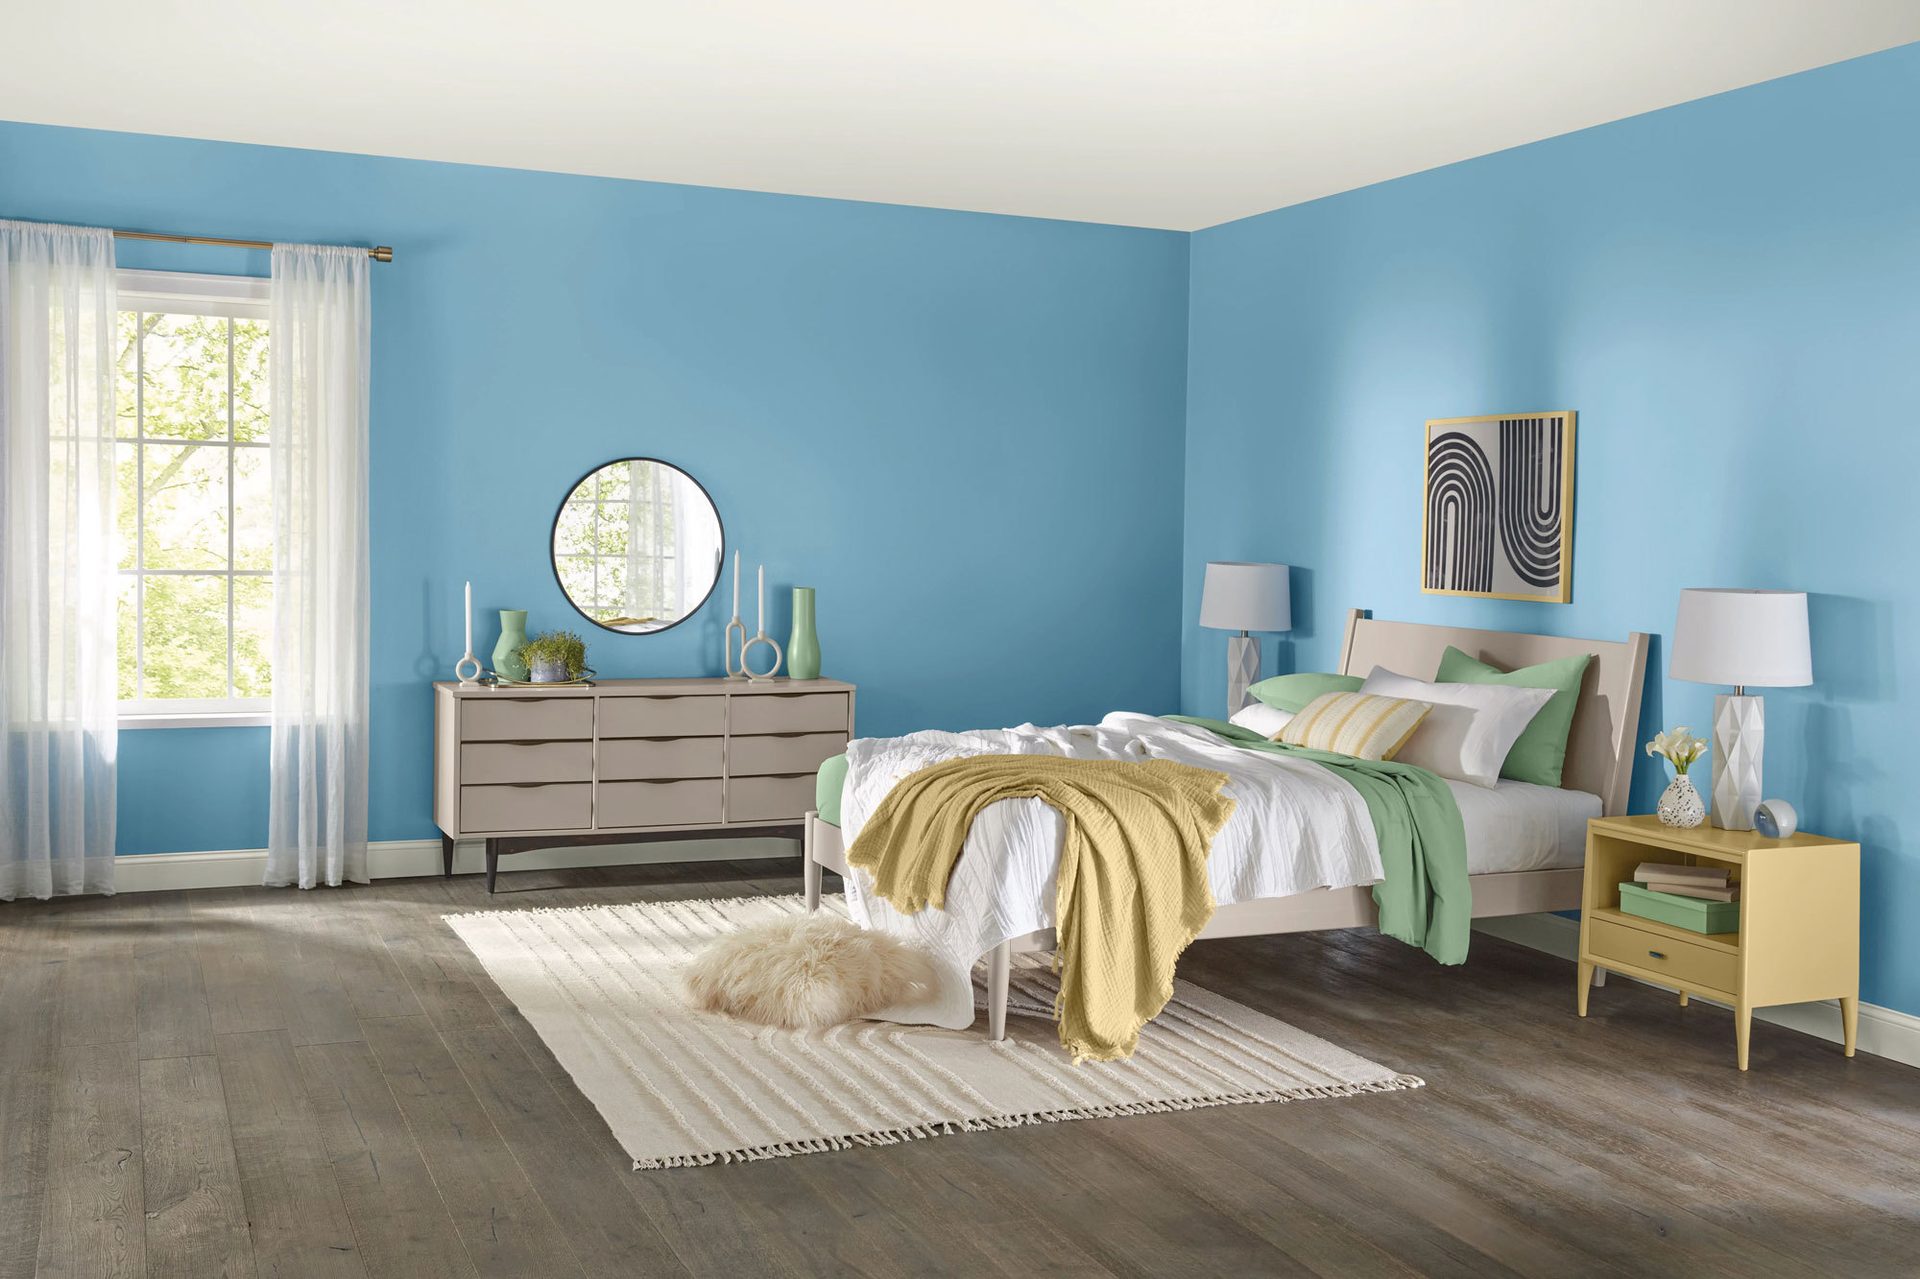 Interior design, Furniture, Window, Blue, Green, Comfort, Wood, Cabinetry, Drawer, Flooring